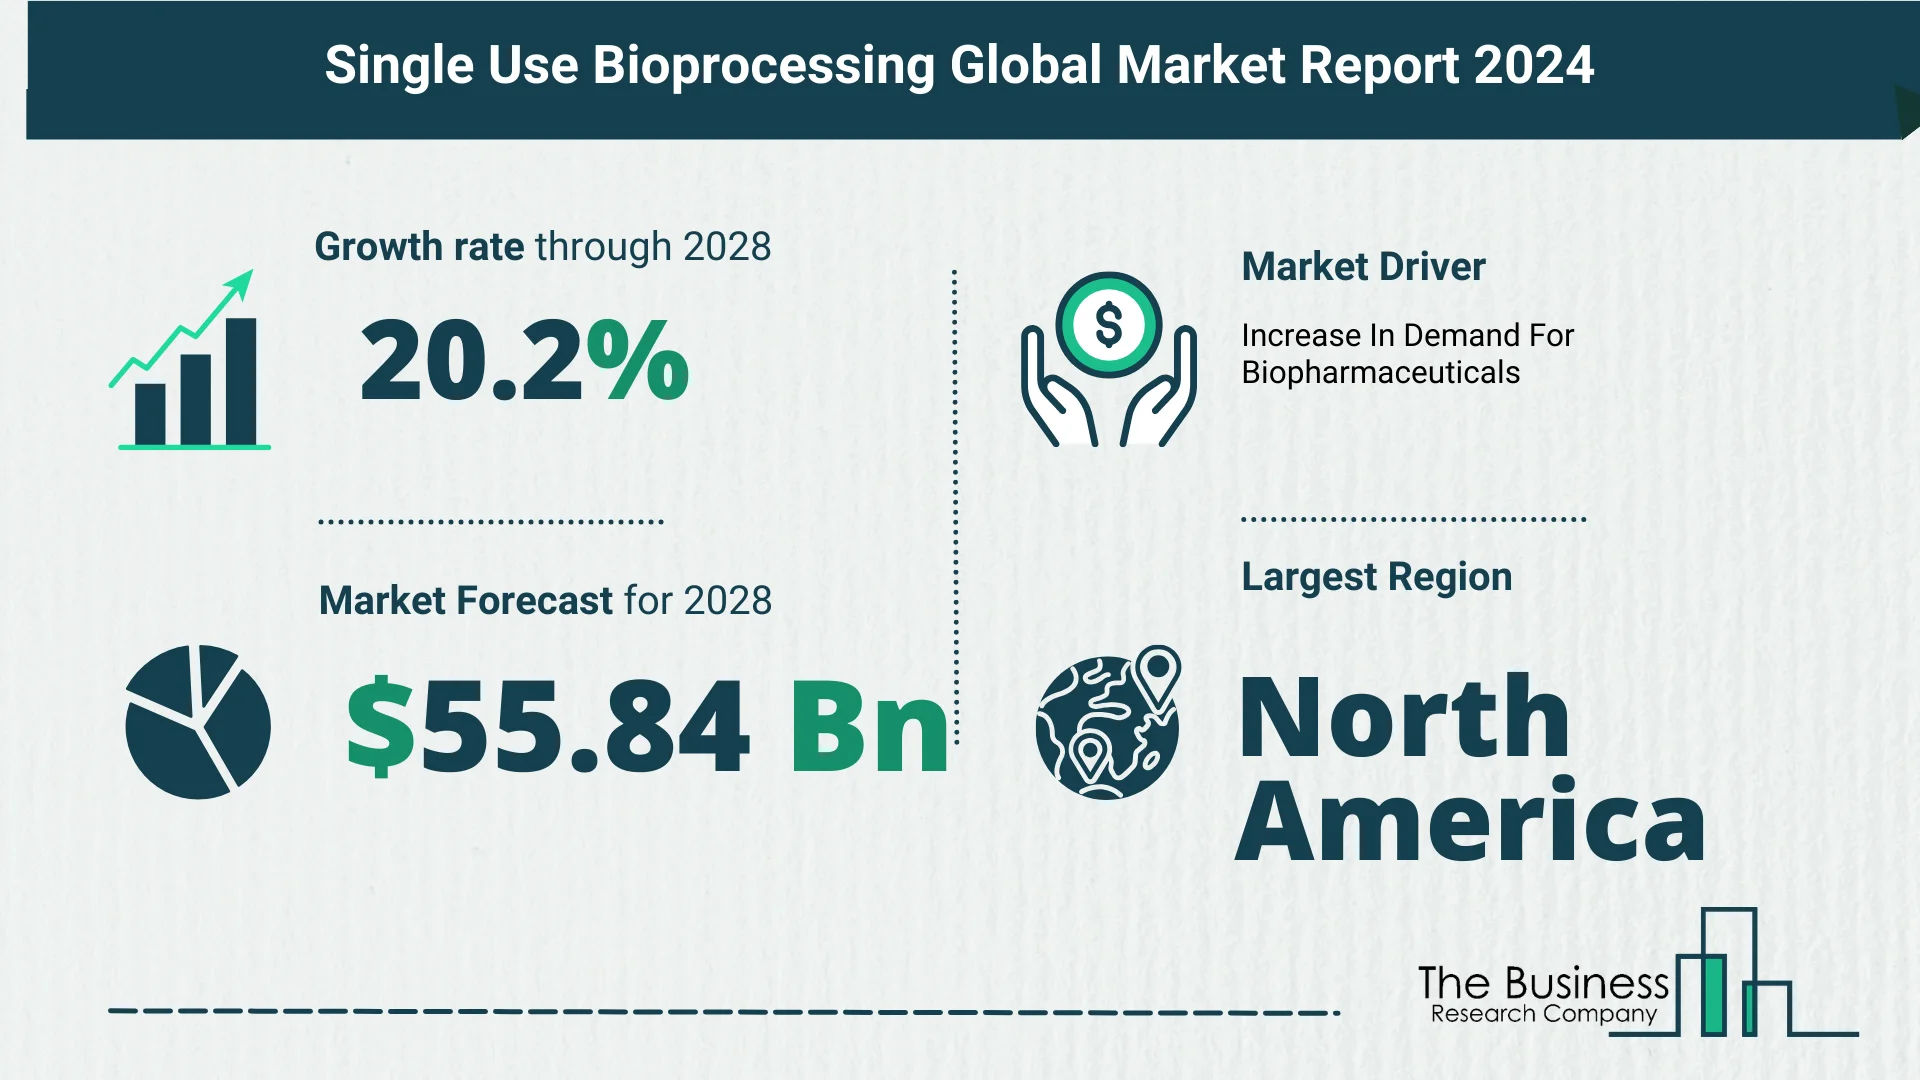 Global Single Use Bioprocessing Market Report